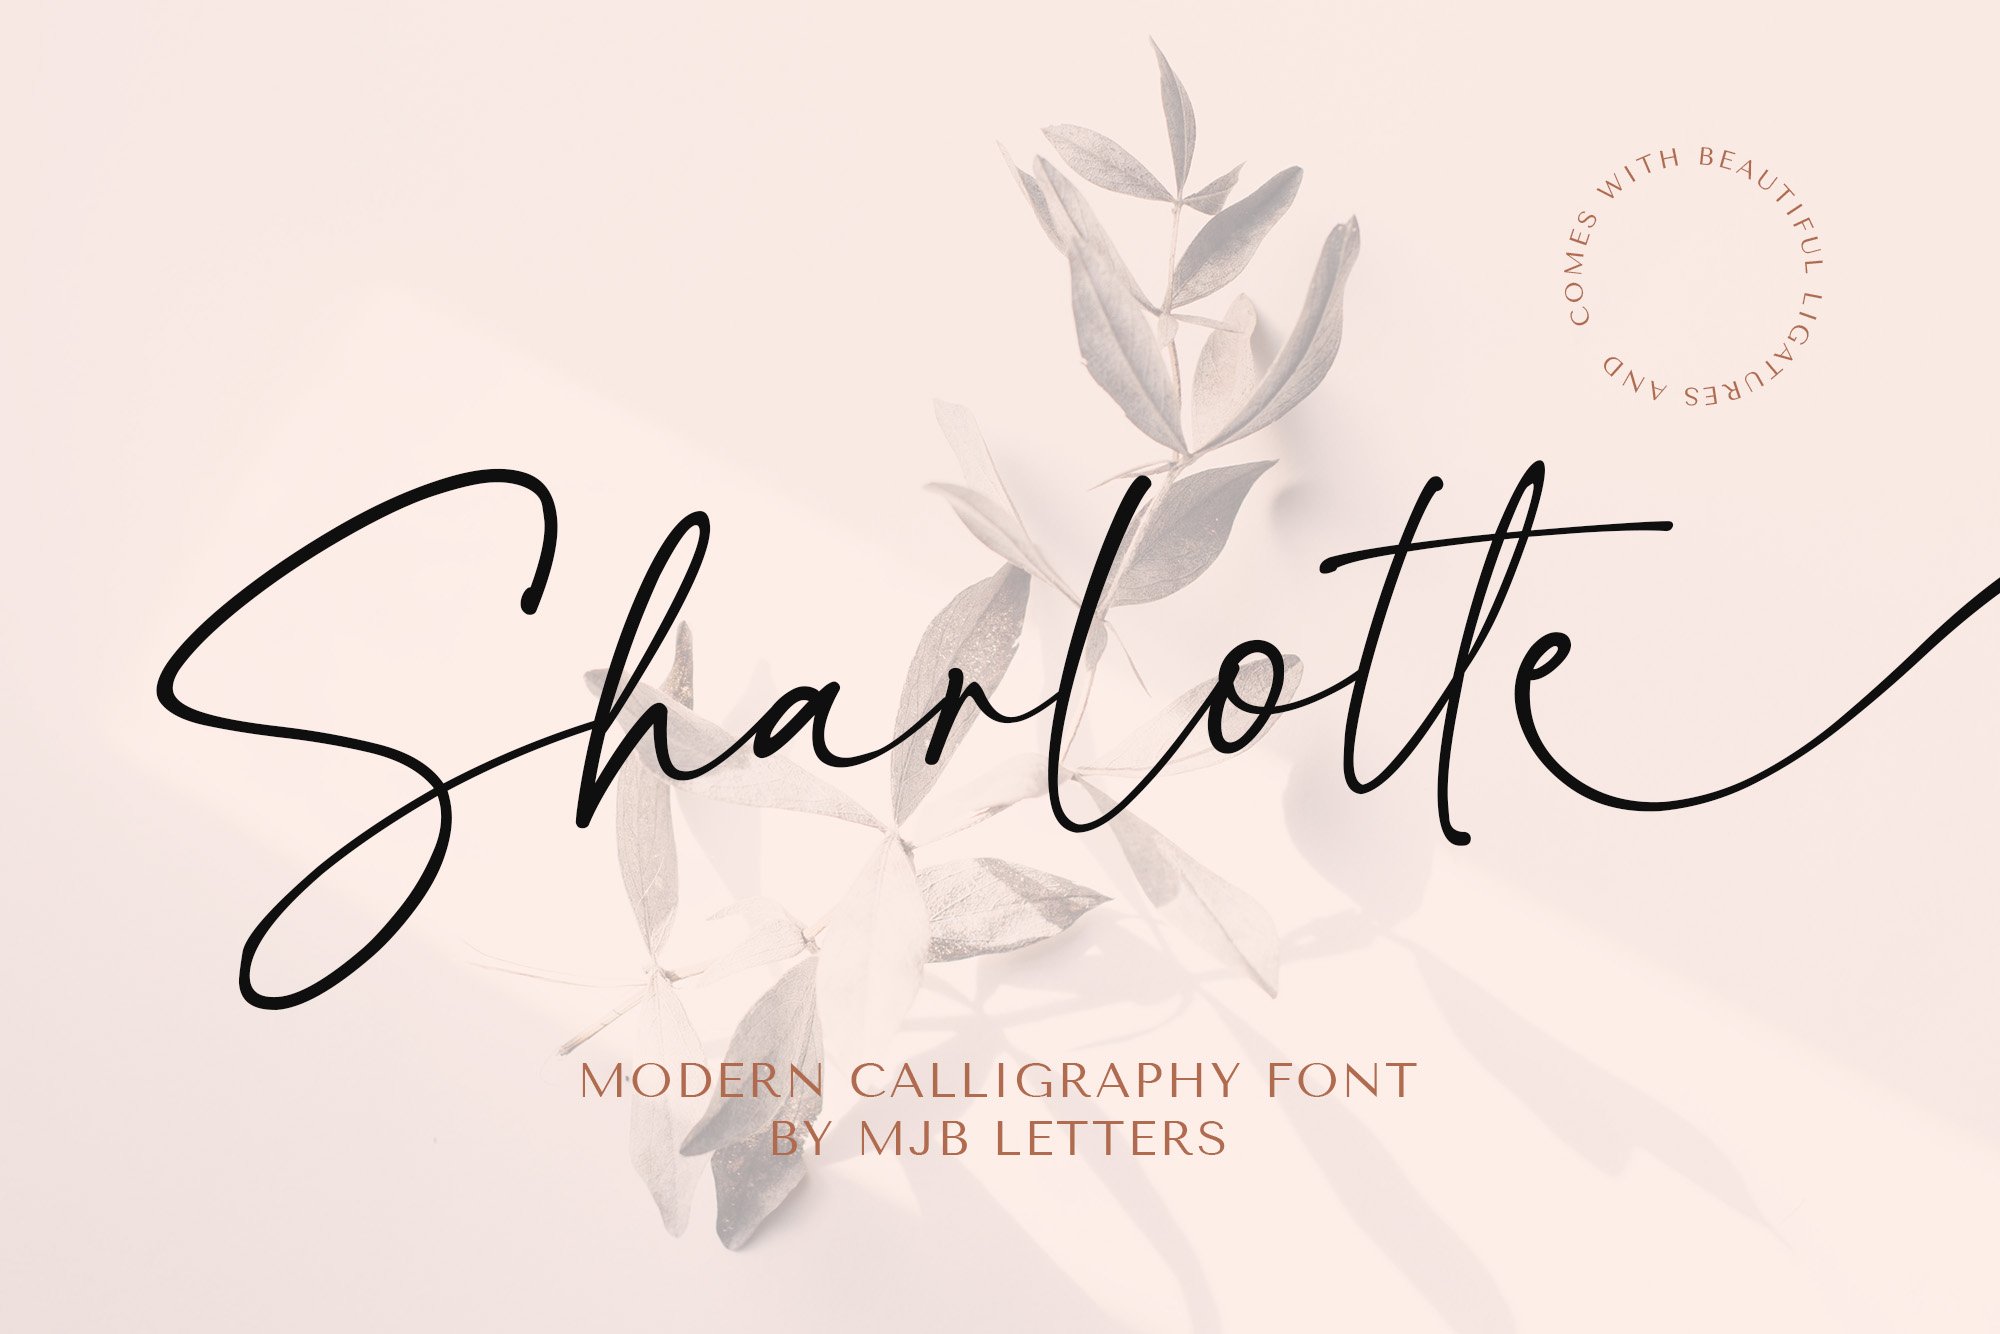 Sharlotte - Modern Calligraphy Font